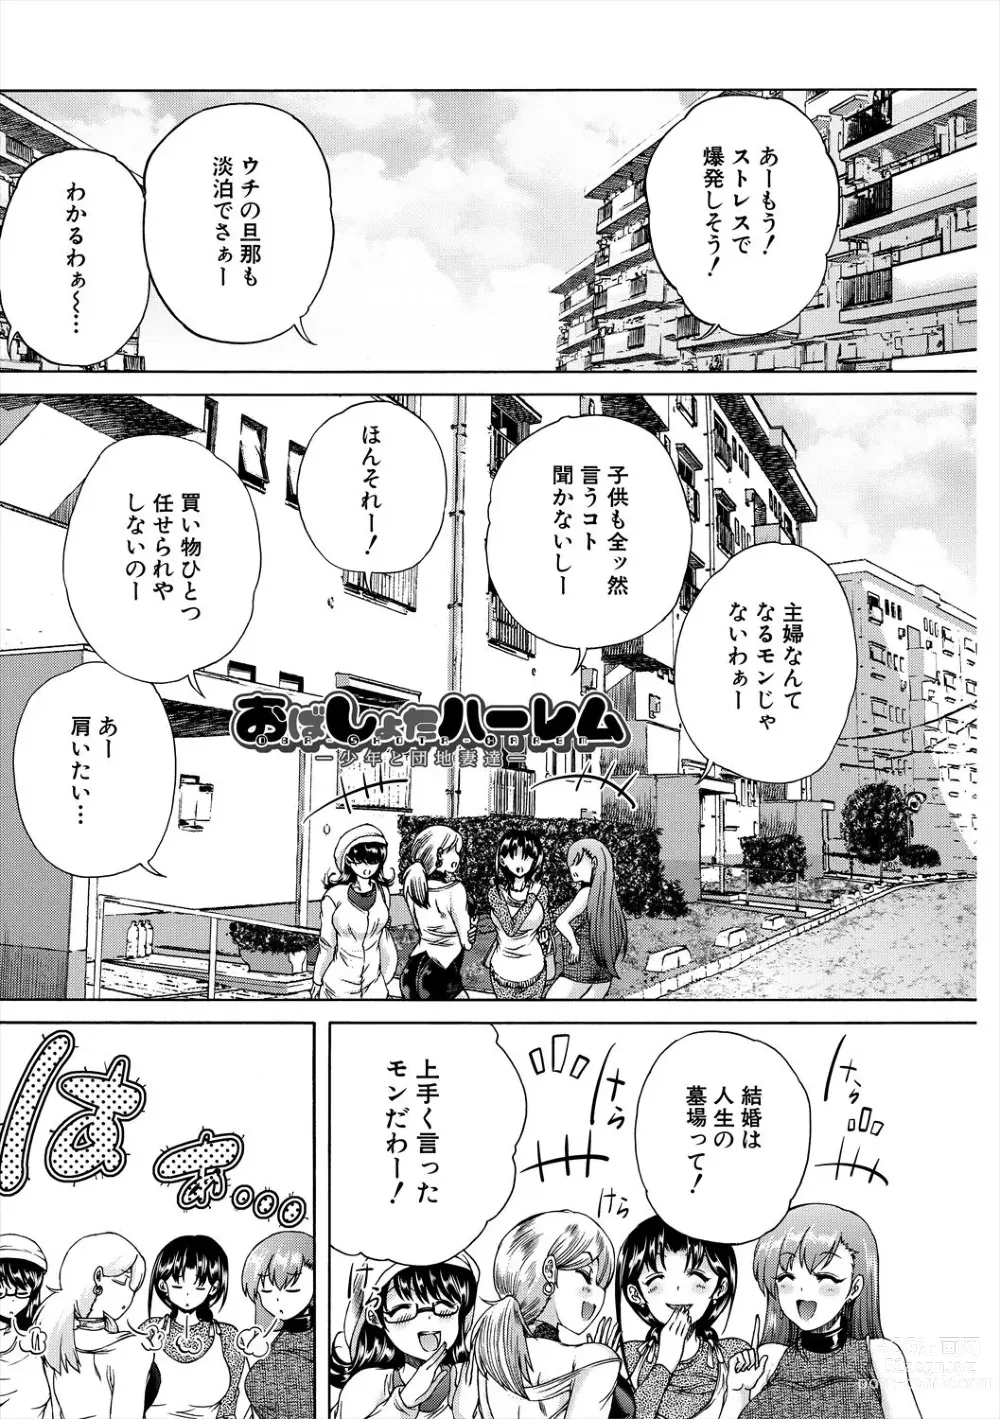 Page 3 of manga Oba-Shota Harem